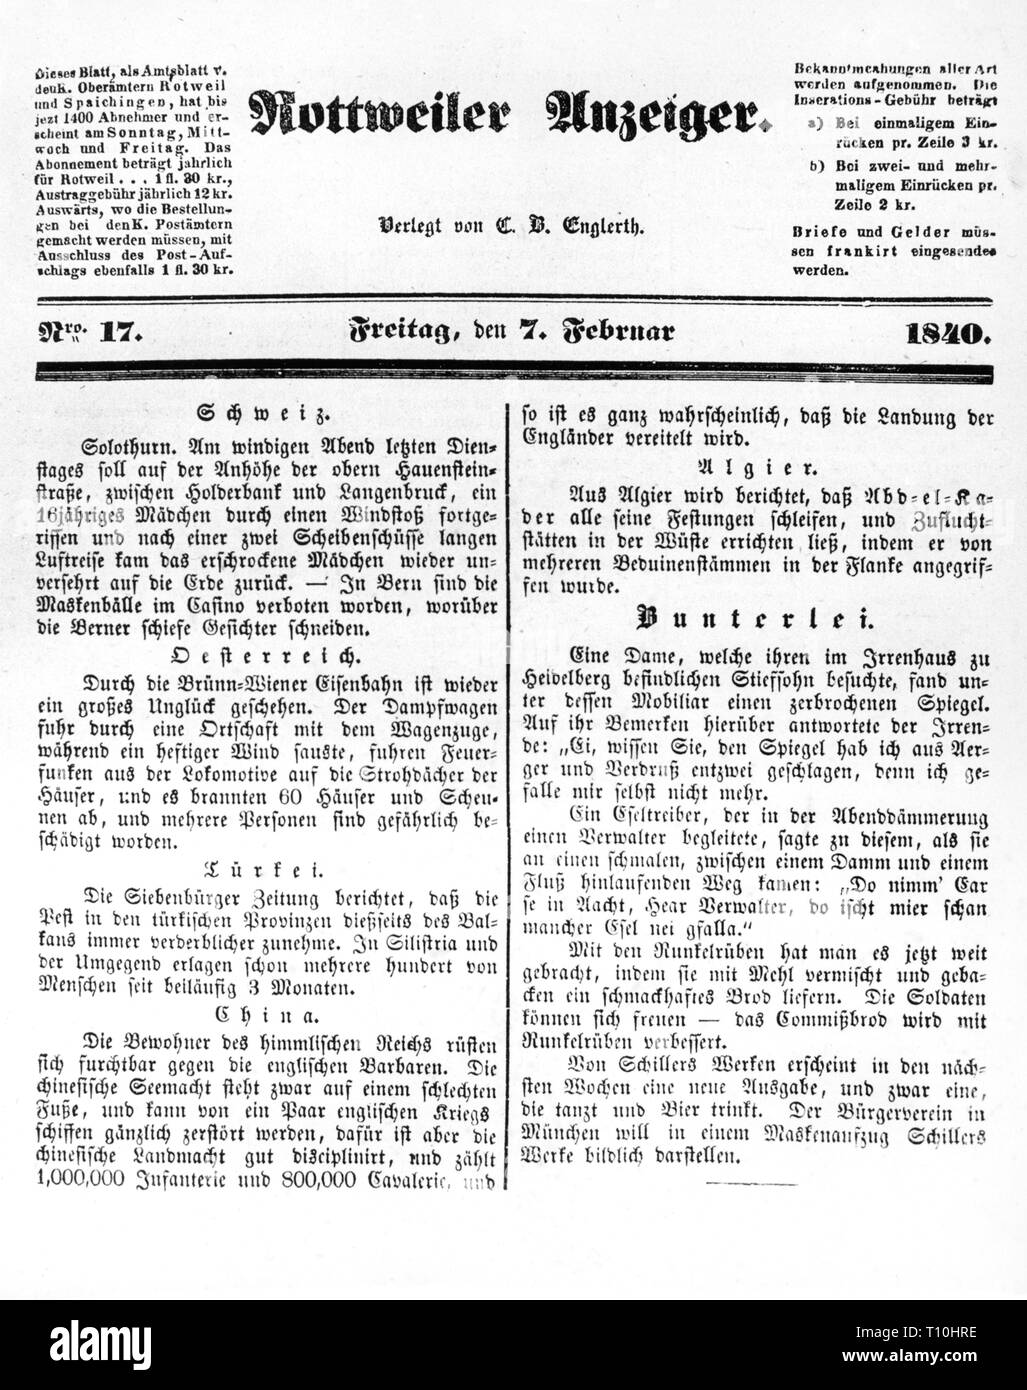 Presse/Medien, Zeitschriften, "Rottweiler Anzeiger, Titelseite, Nummer 17, Rottweil, 7.2.1840, Additional-Rights - Clearance-Info - Not-Available Stockfoto